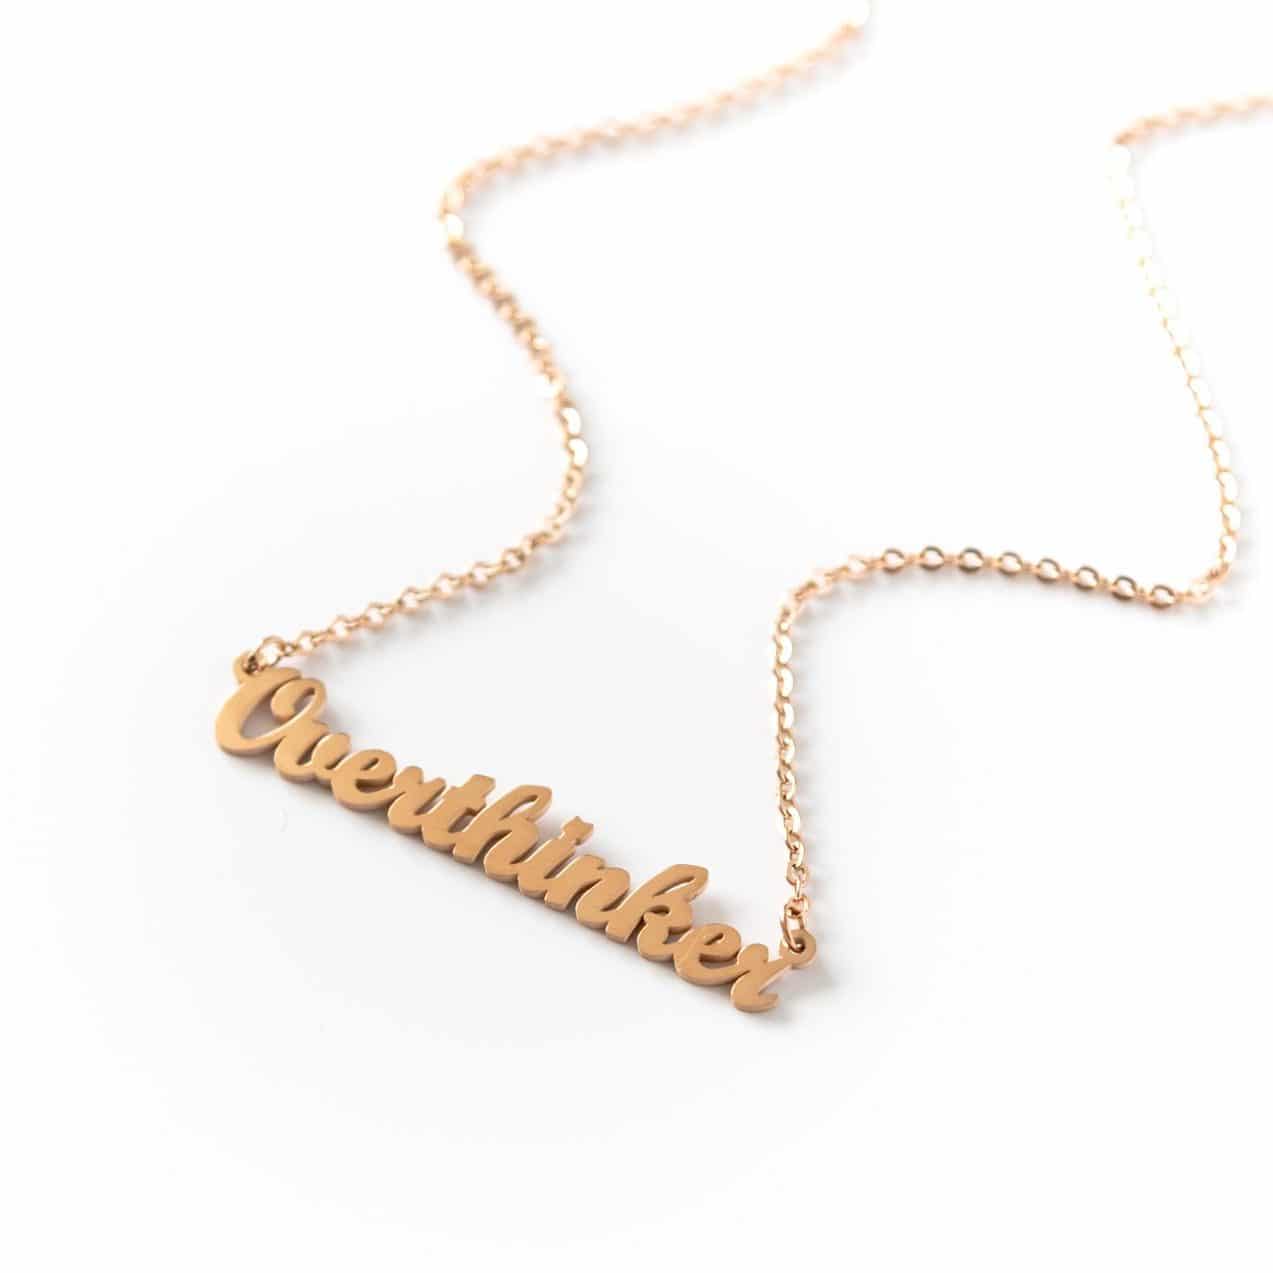 Overthinker necklace - Trend Tonic 